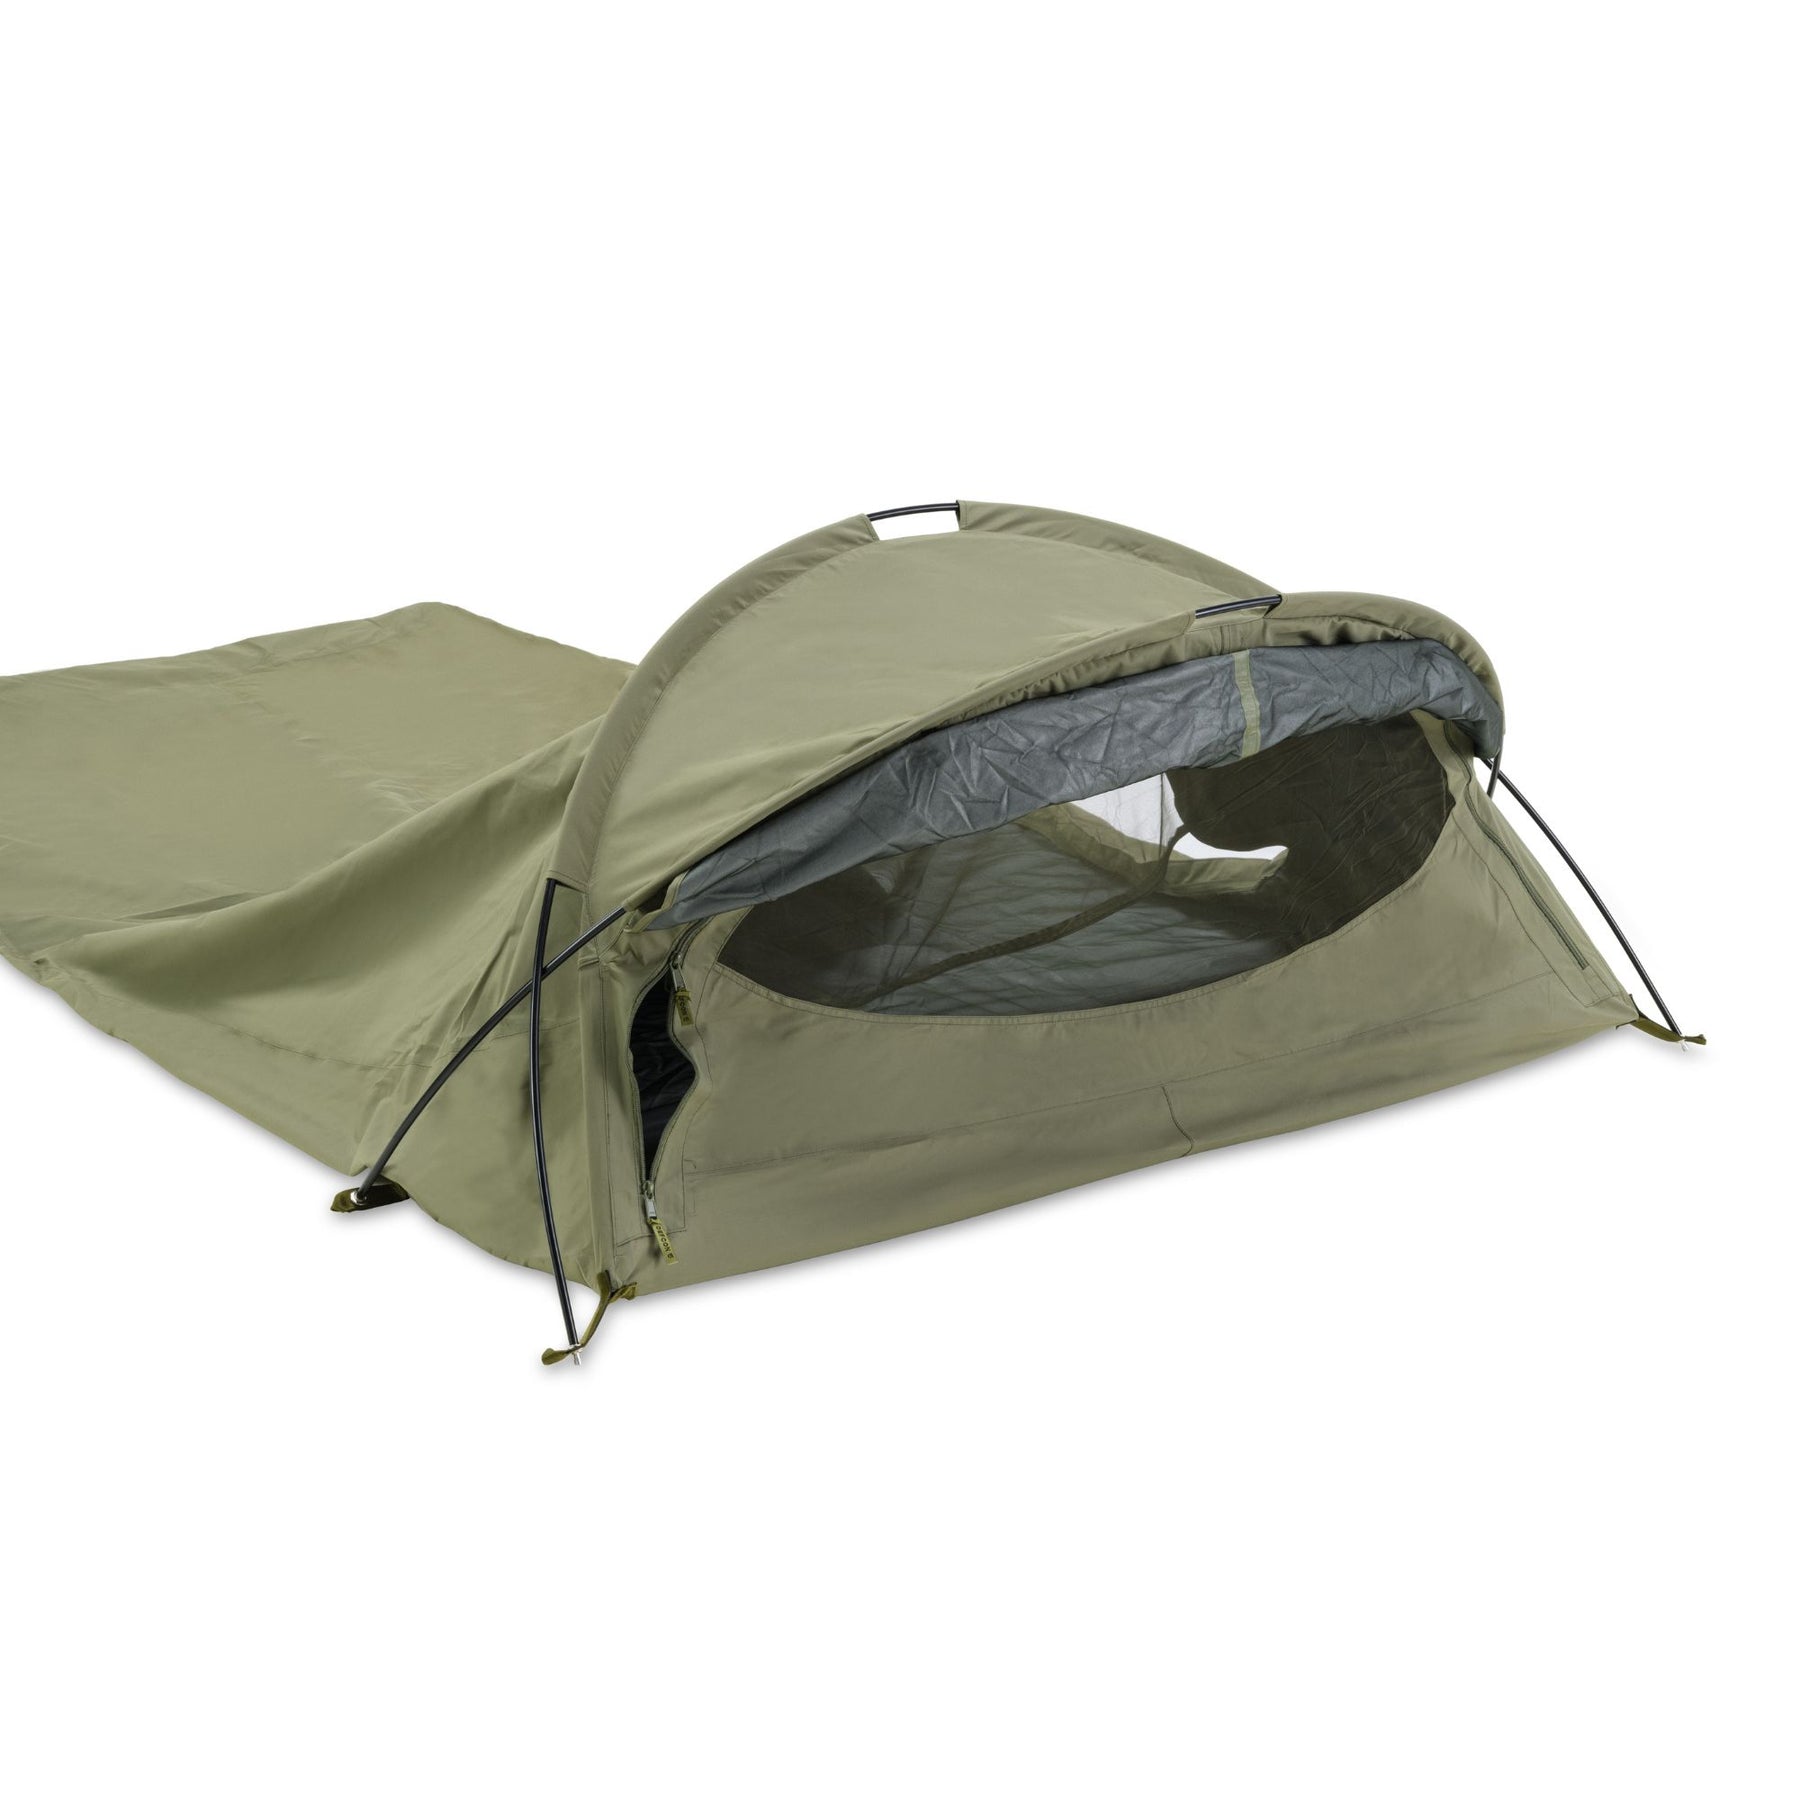 DEFCON 5 | DOUBLE BIVI TENT - Bivy Tent per due persone